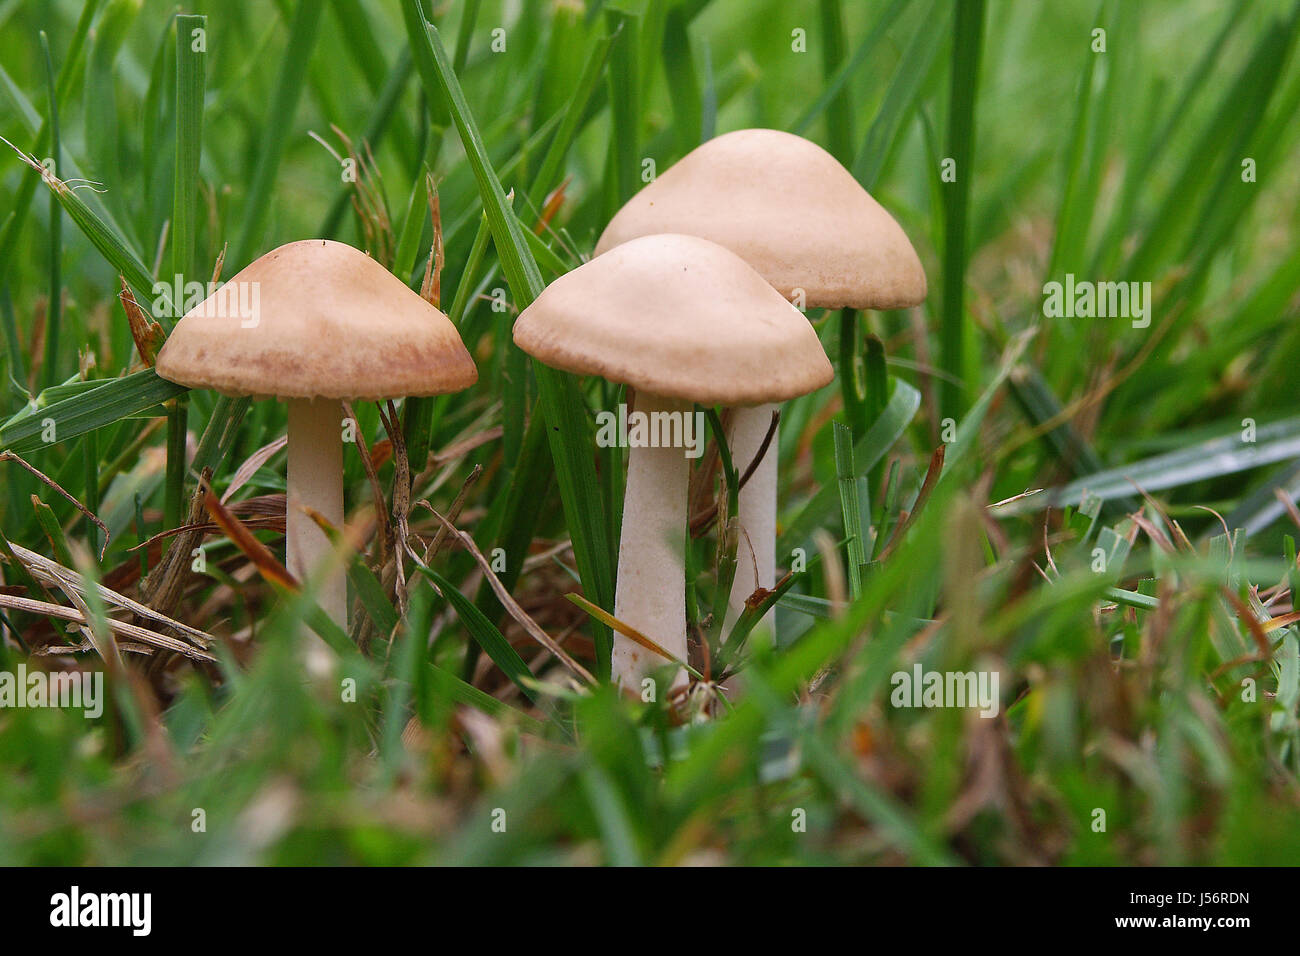 mushrooms mushroom fungus edible nontoxic meadow grass lawn green toxic Stock Photo